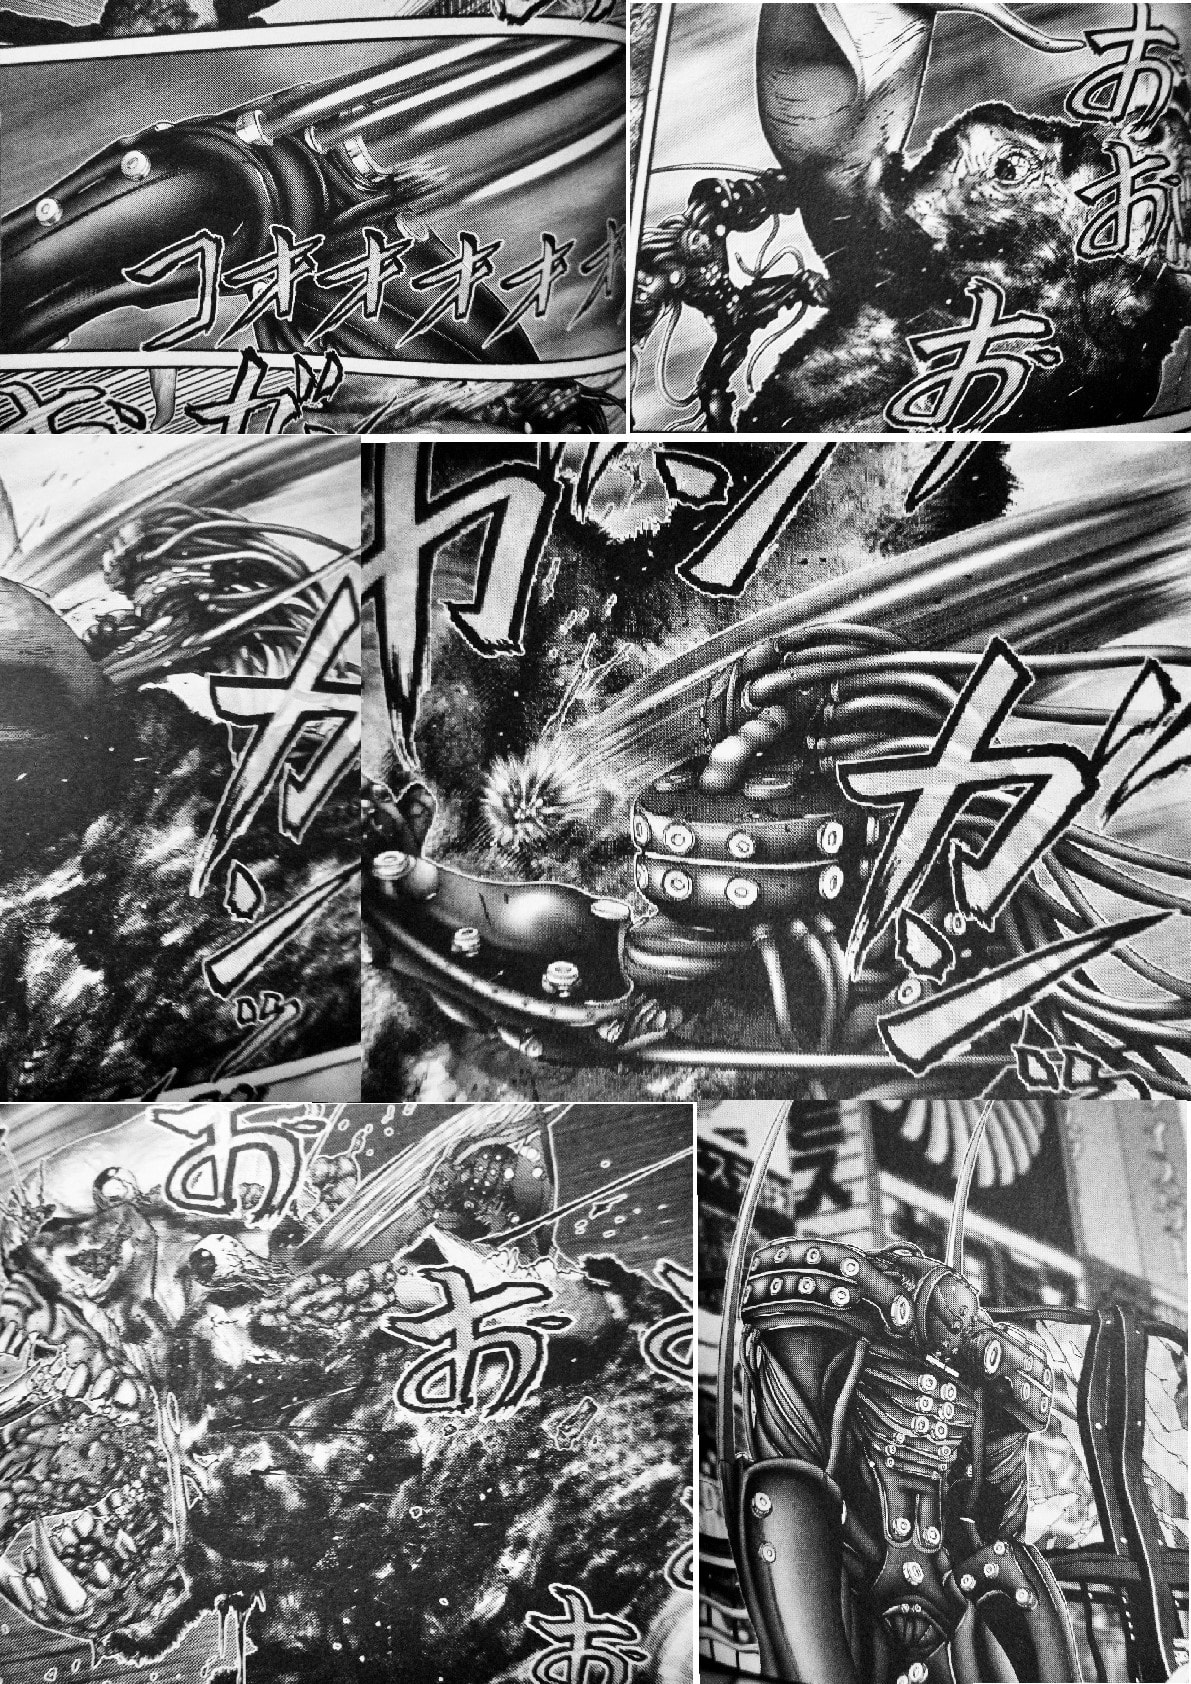 Gantz 大阪ガンツメンバー最強の岡八郎 凄まじい破壊力 個人的に気に入った漫画だったり 書籍だったりを気まぐれで紹介するモトブログおじさん